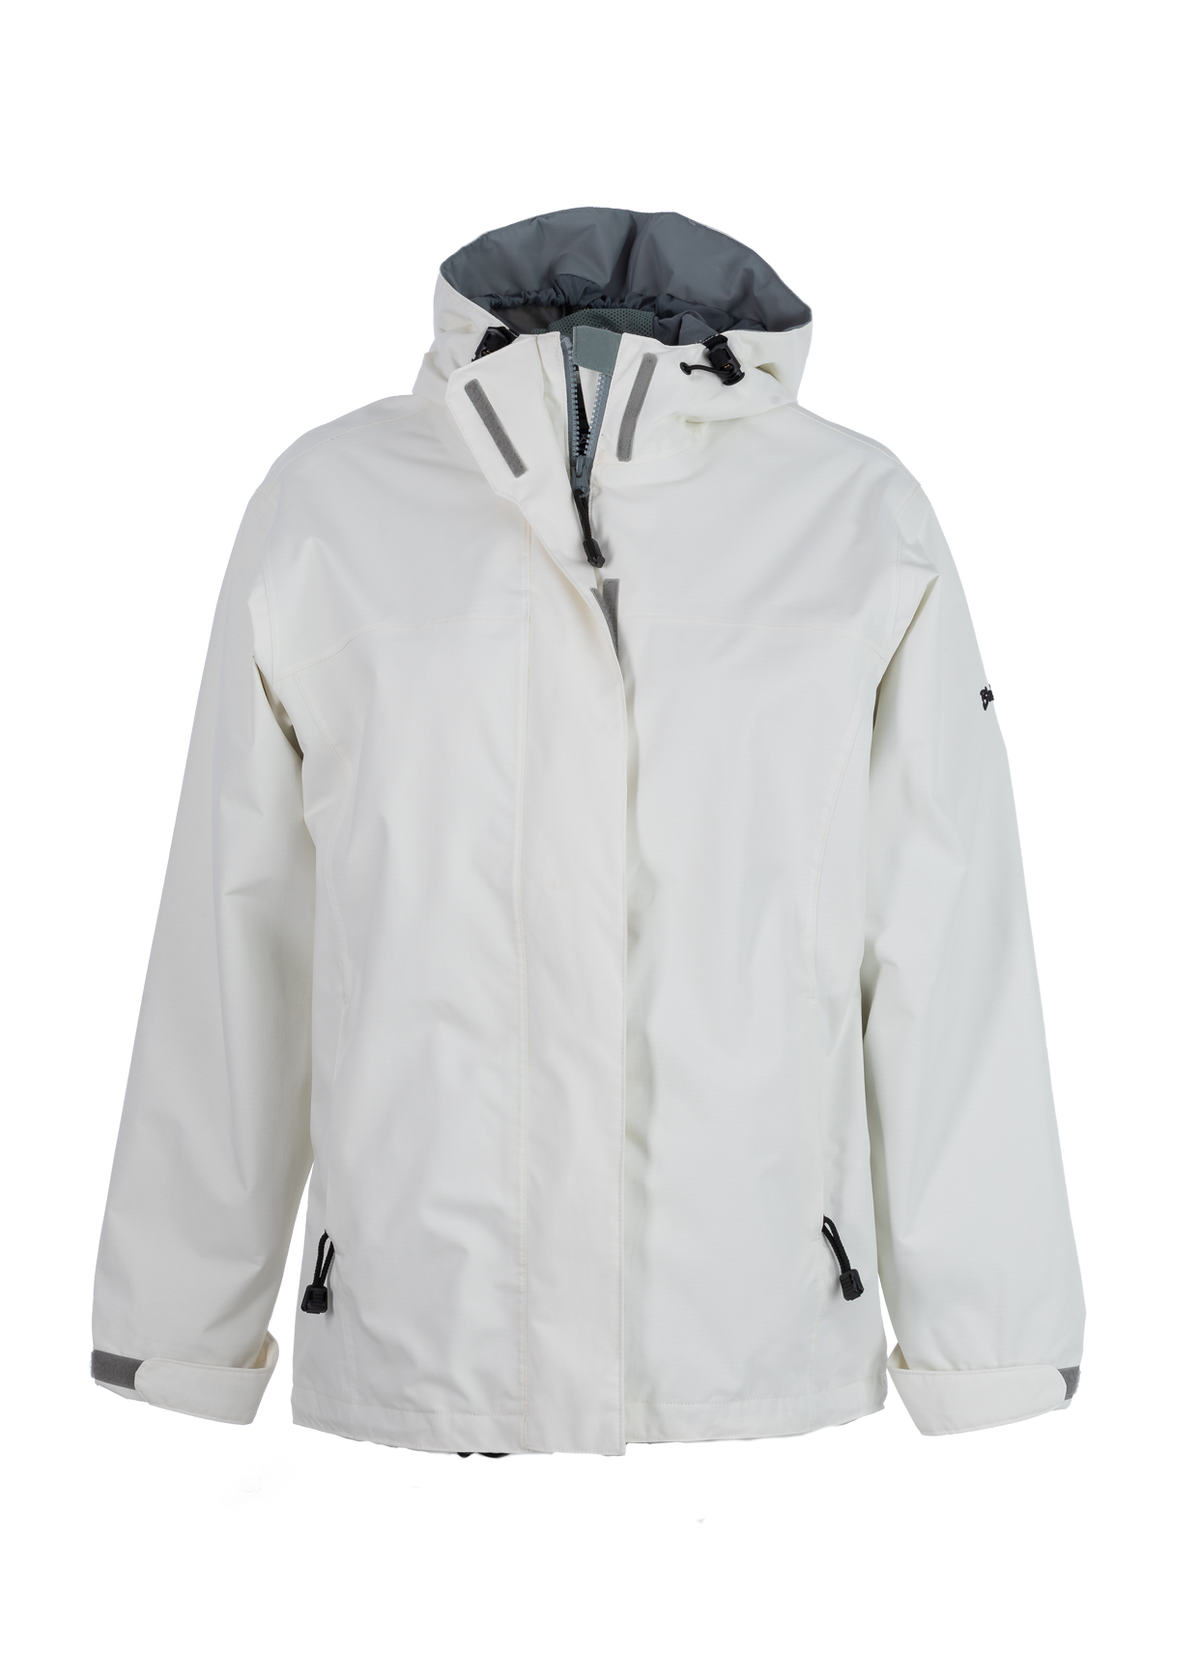 Bimini Bay Outfitters Boca Grande Women's Waterproof Breathable Jacket - image 4 of 6